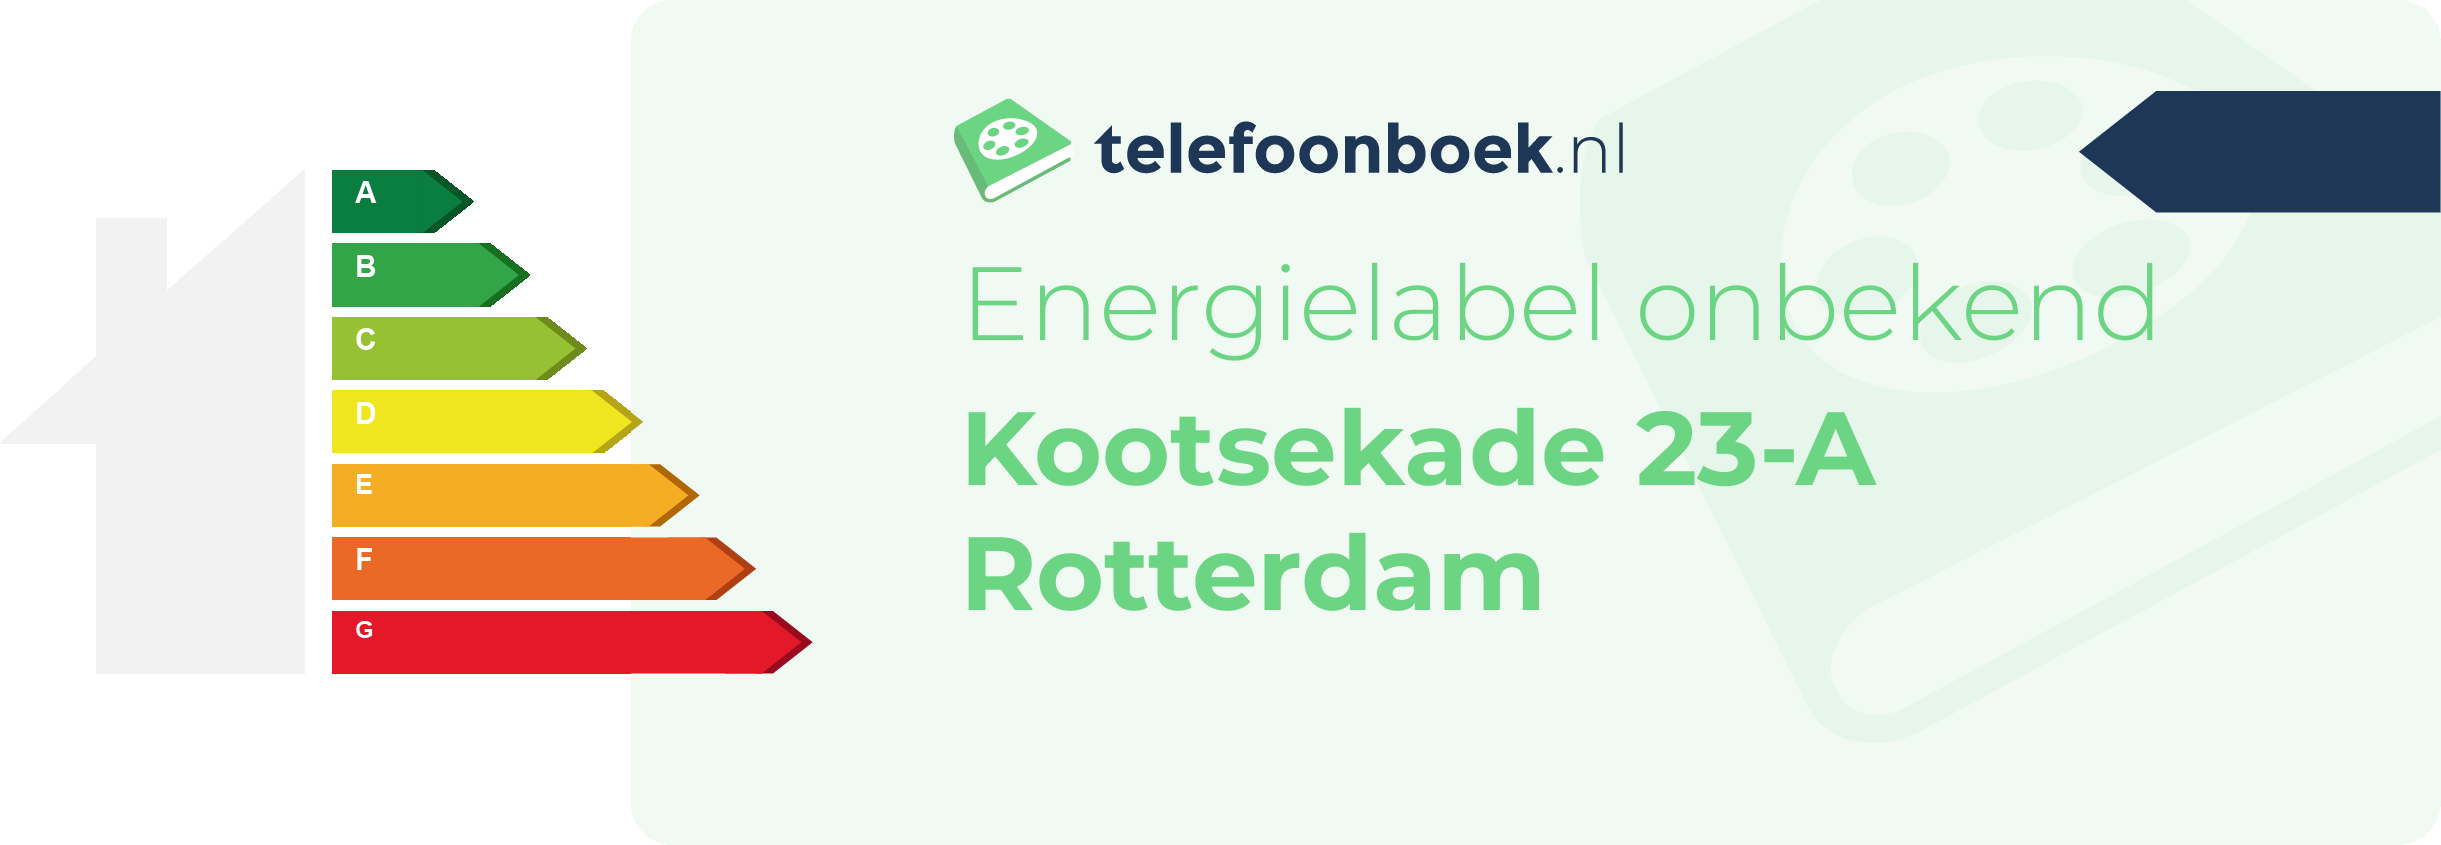 Energielabel Kootsekade 23-A Rotterdam